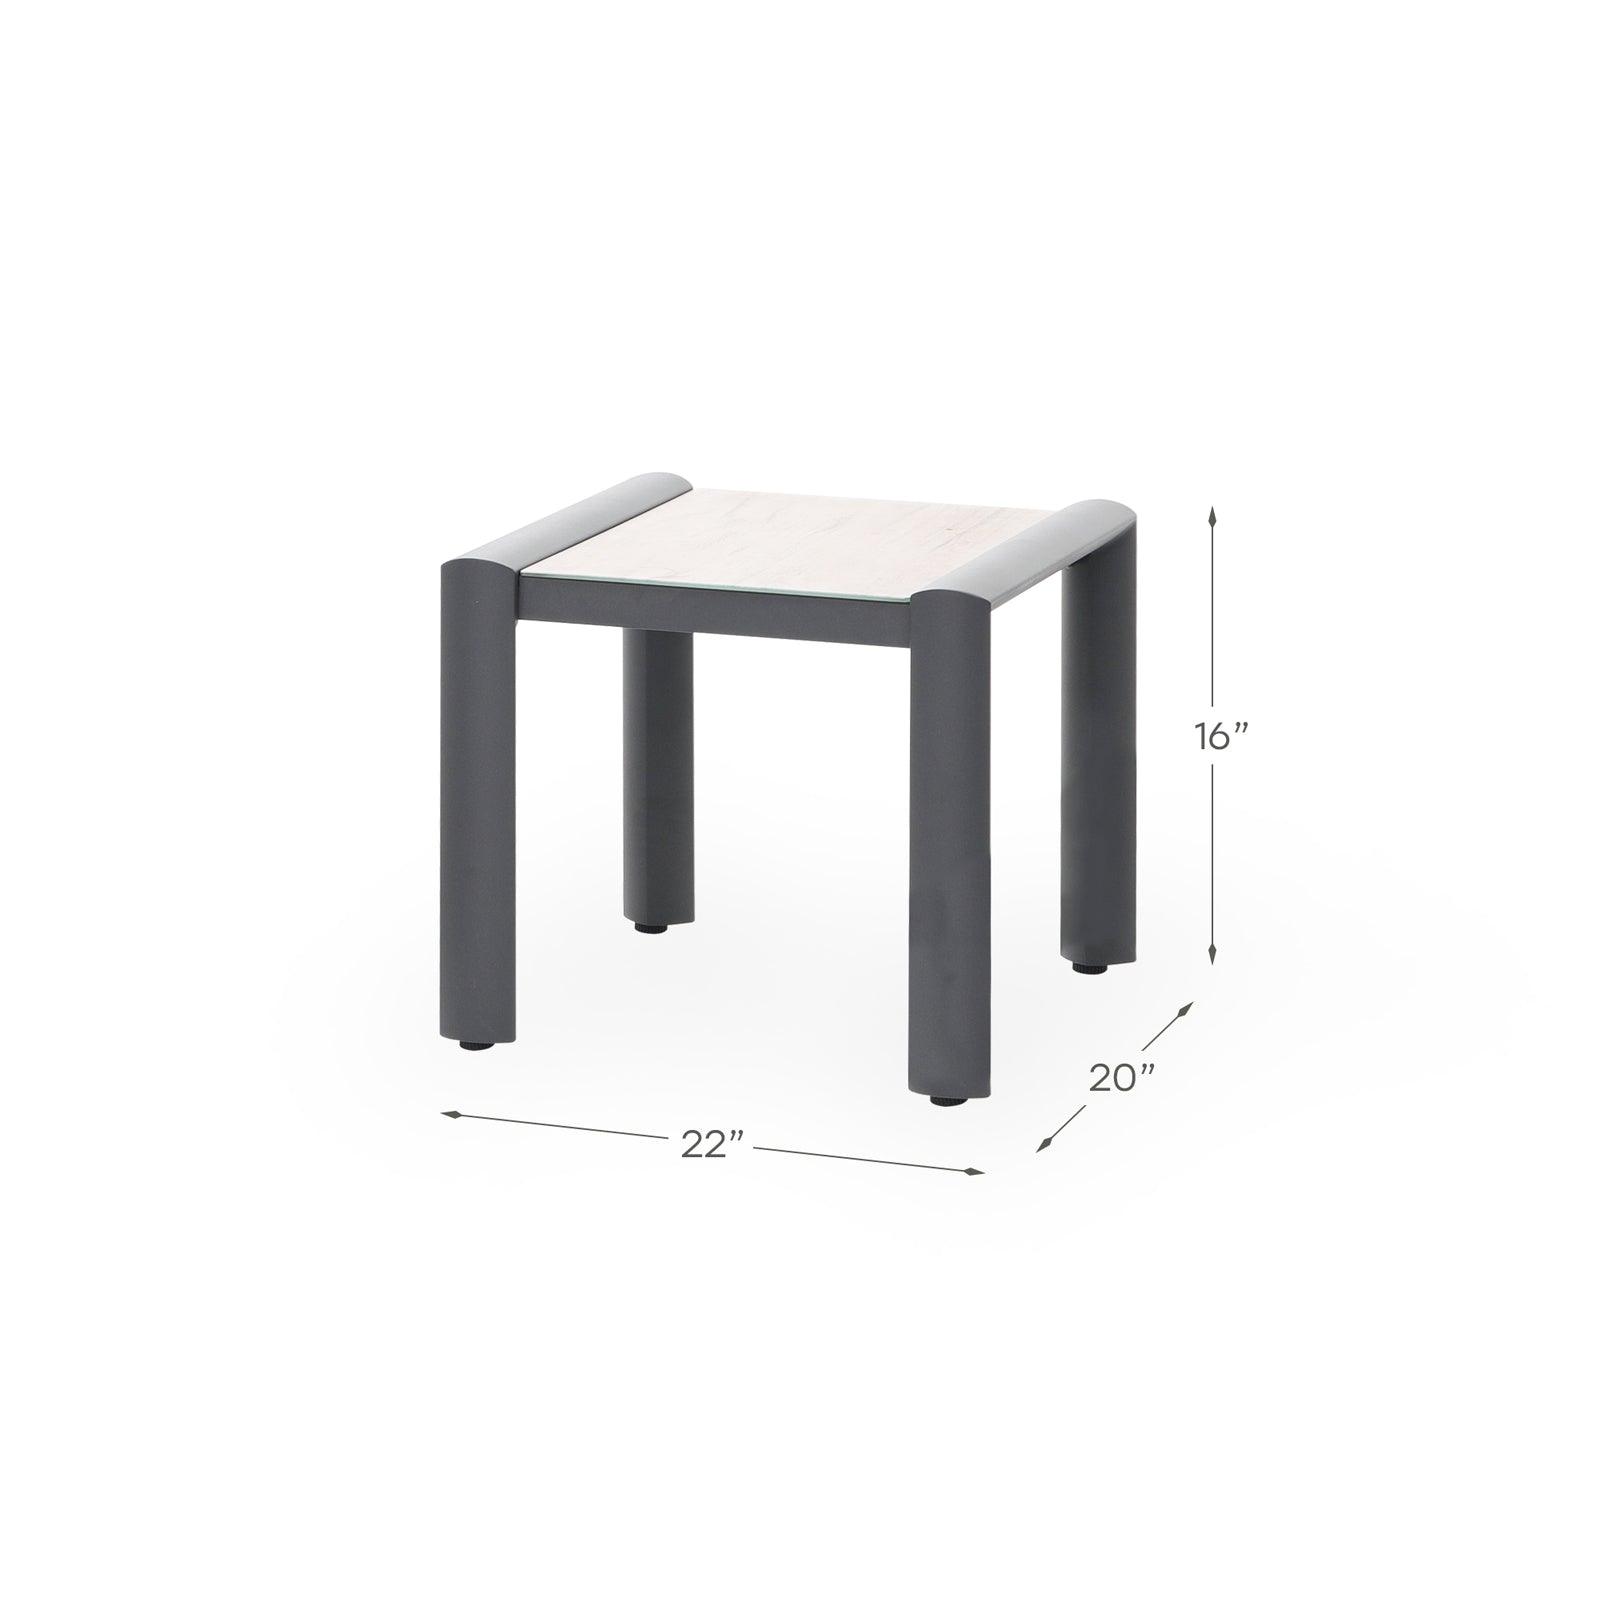 Capri grey table with adjustable feet, wood tabletop, Dimension info- Jardina Furniture